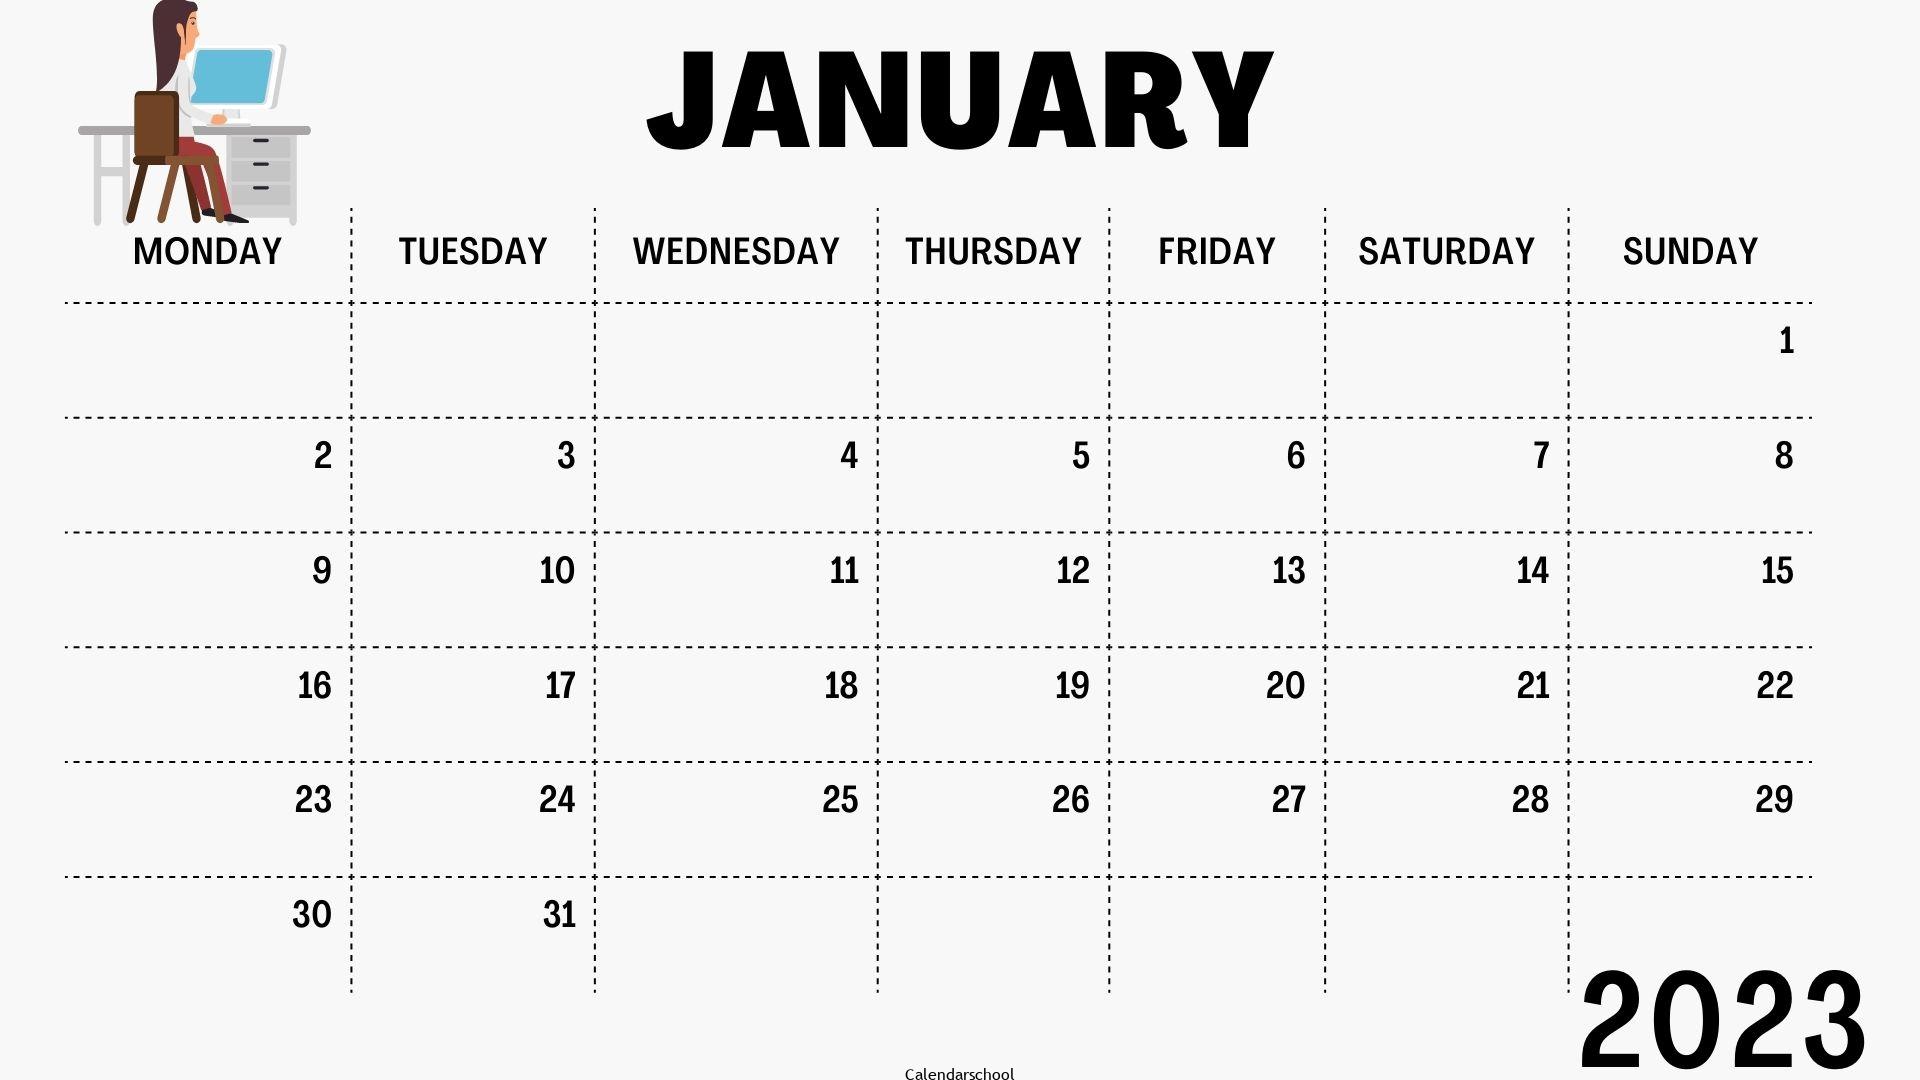 January 2023 Blank Calendar Template